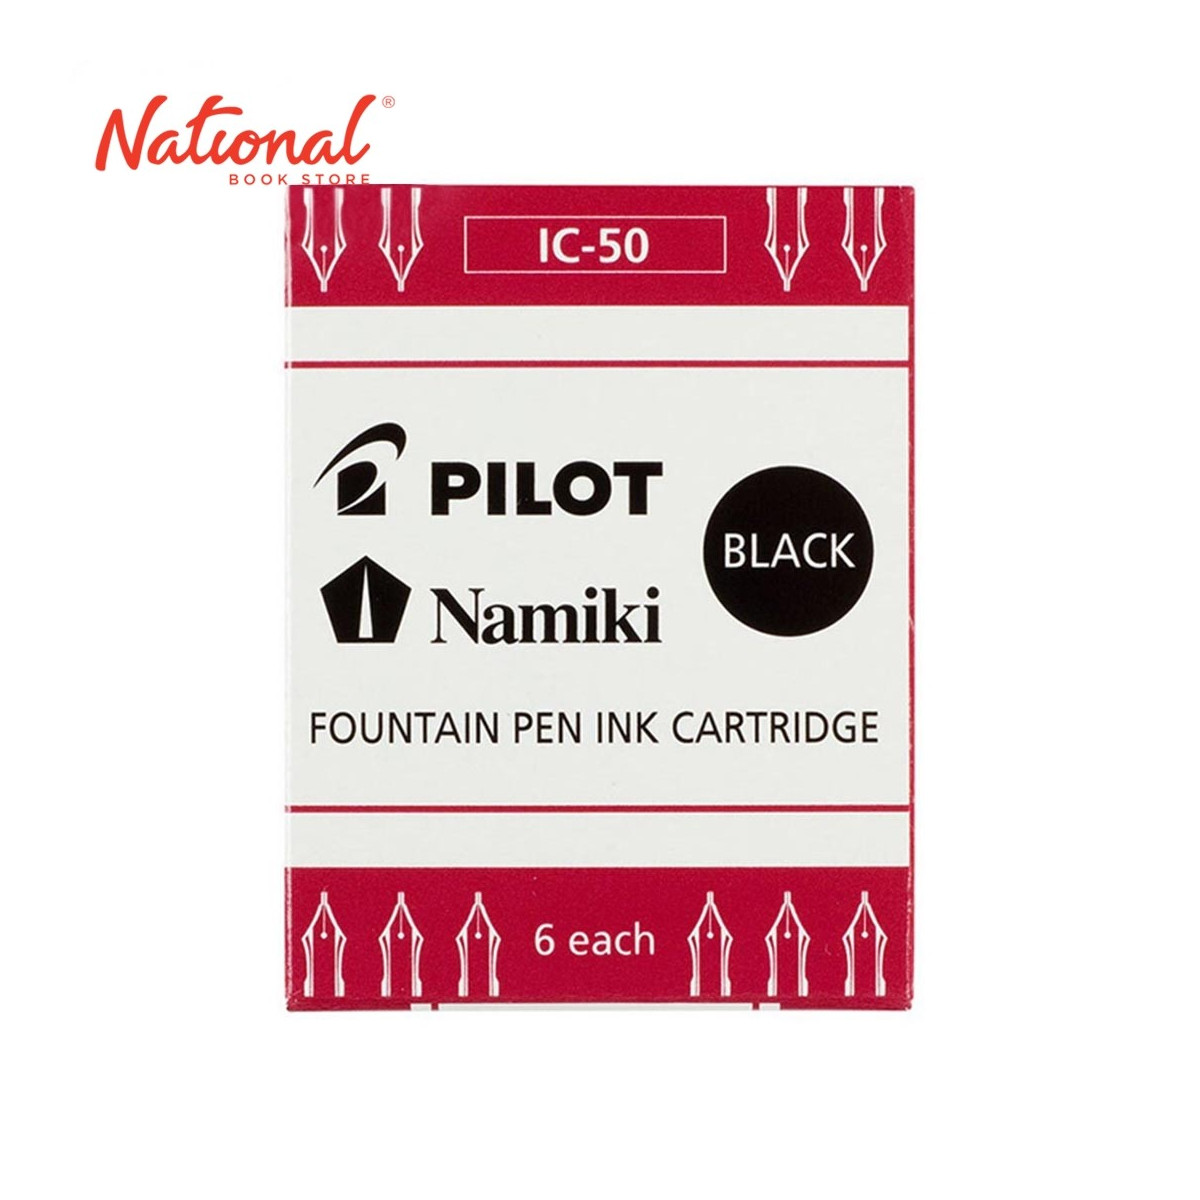 PILOT FOUNTAIN PEN INK CARTRIDGES IC-50 BLACK 6S